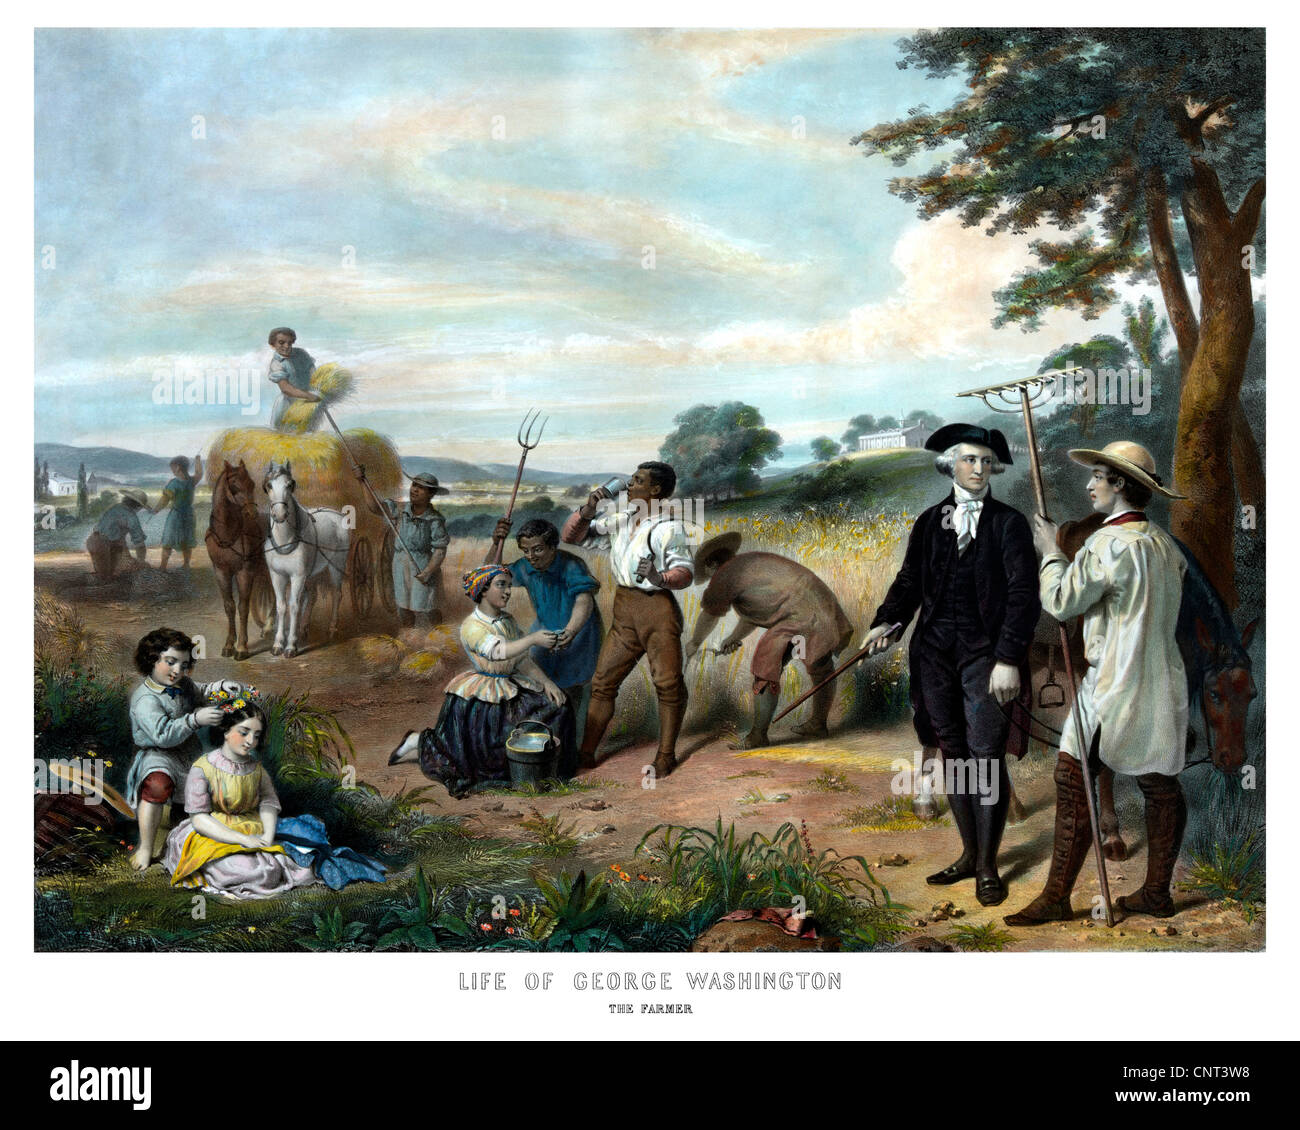 Vintage American history print of George Washington on his farm as slaves work the land behind him. Stock Photo